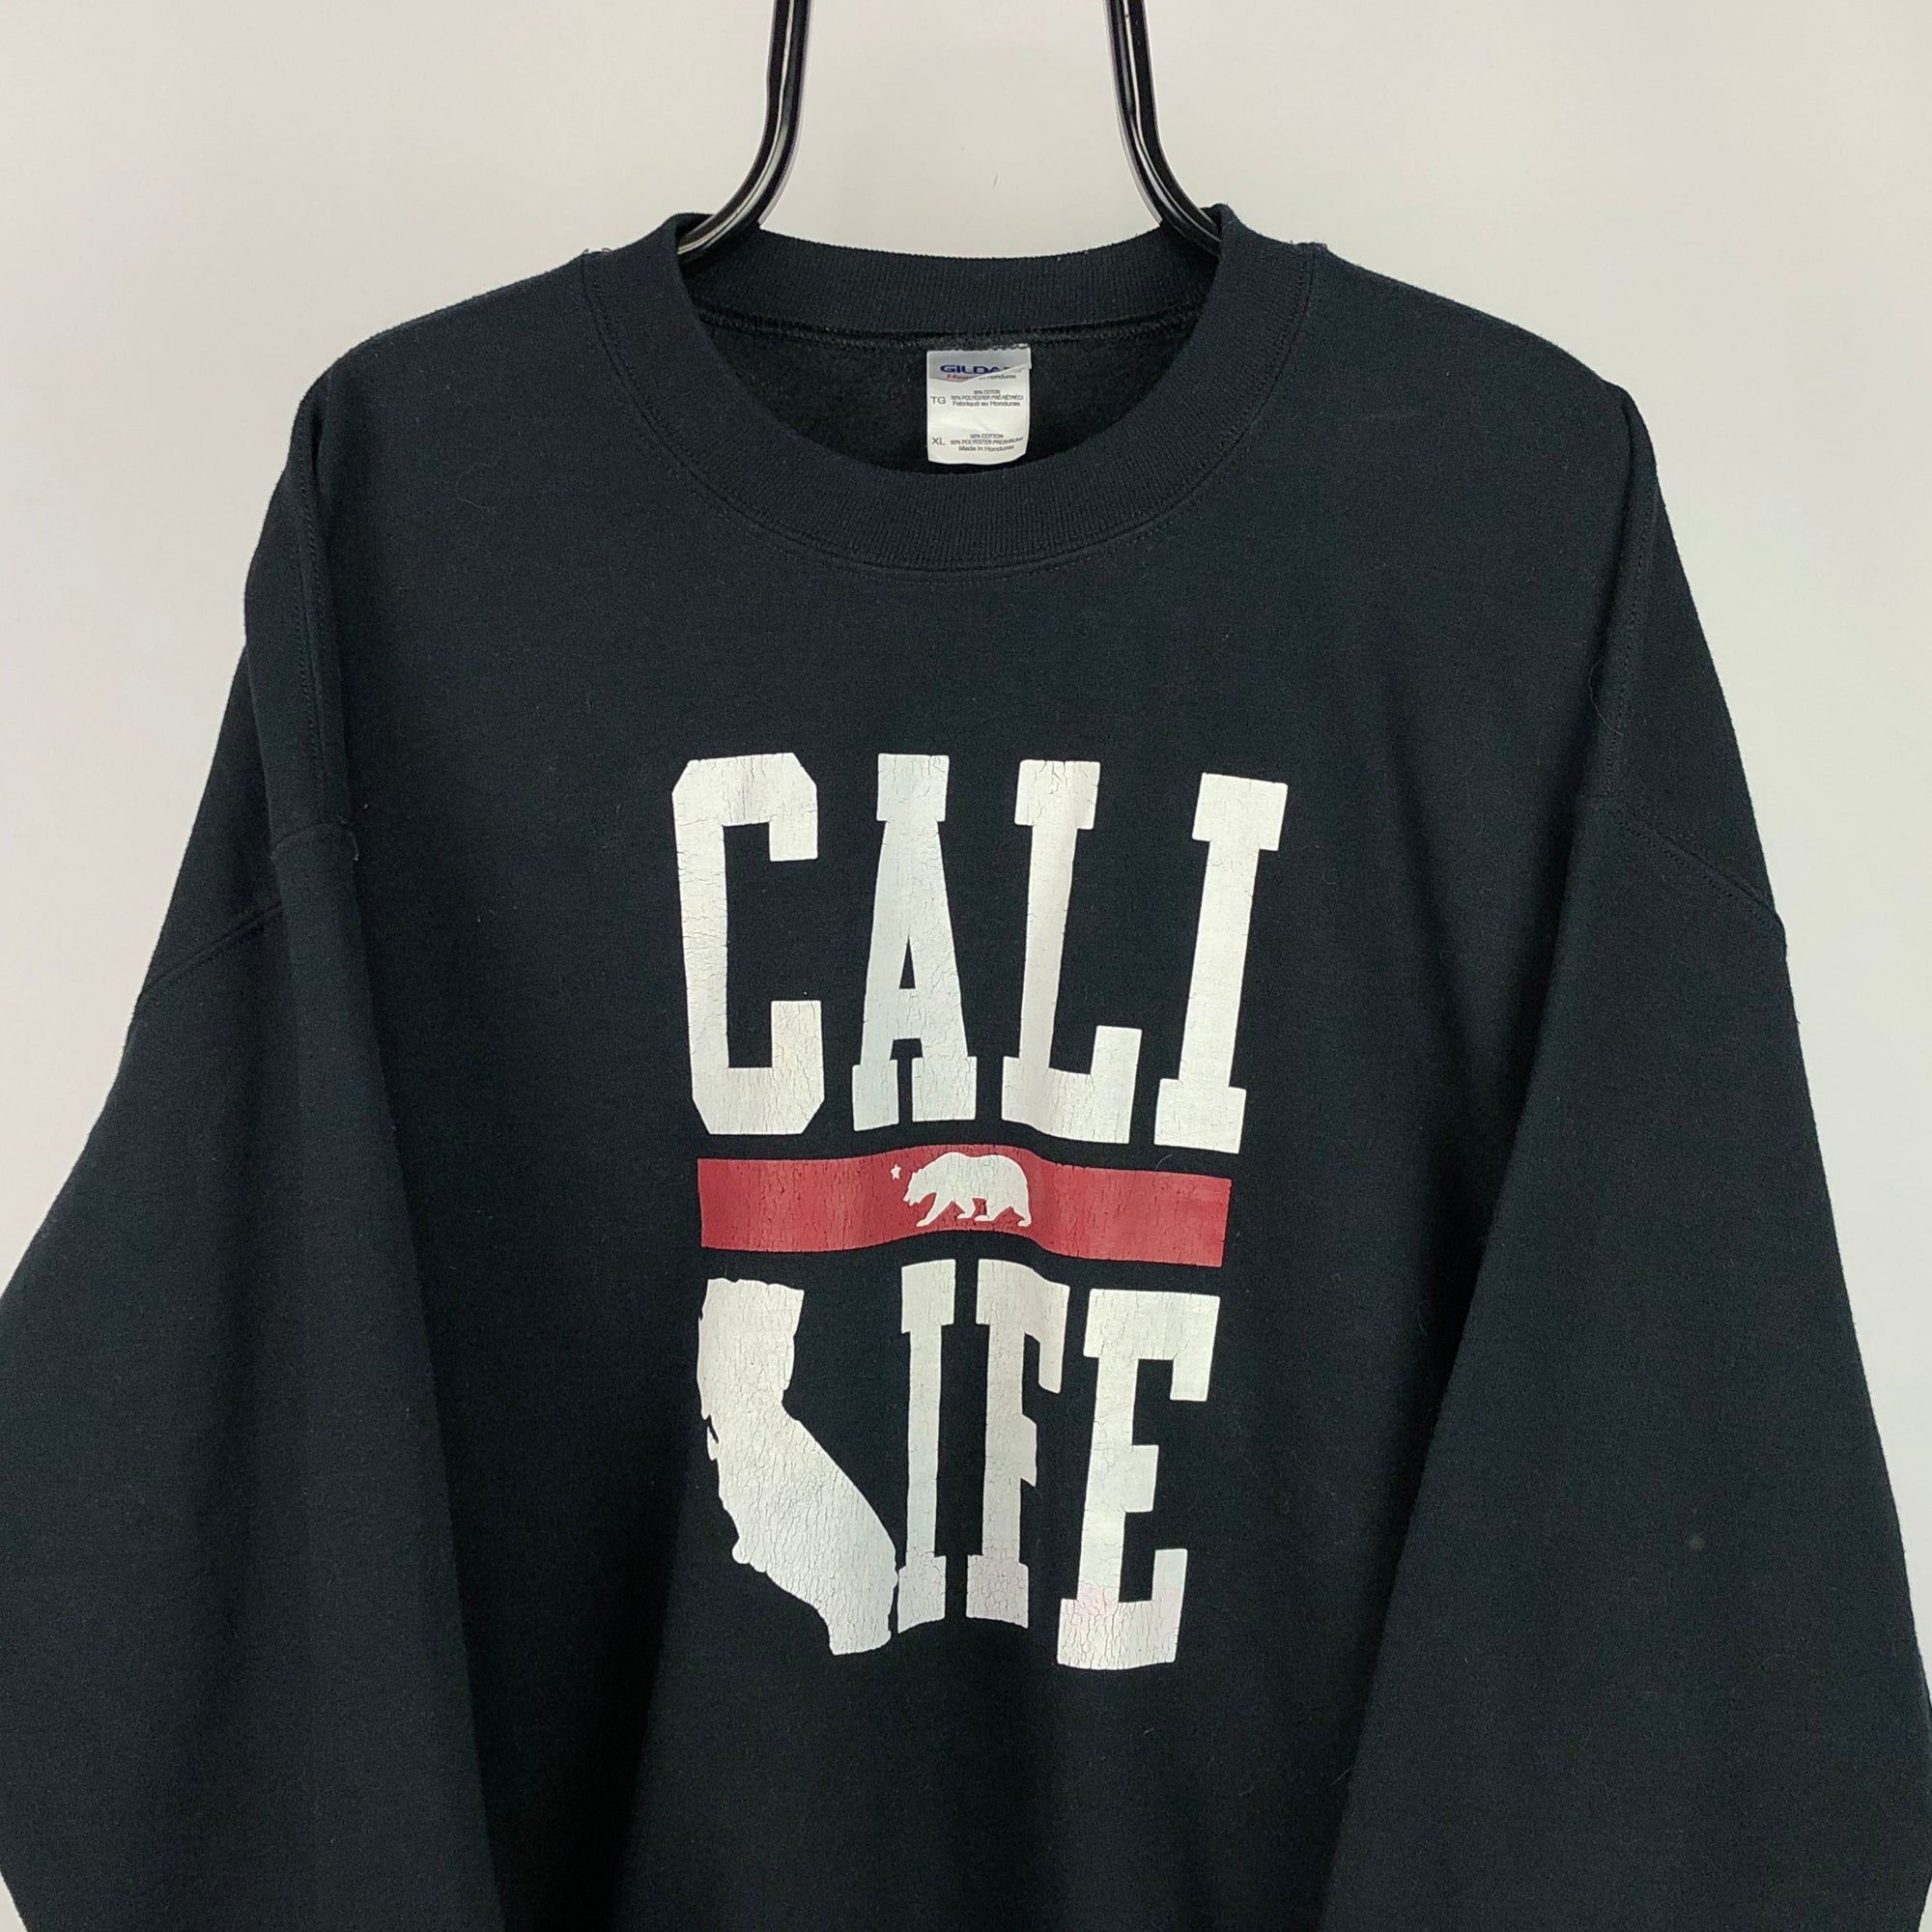 Vintage California Sweatshirt in Black - Men's XL/Women's XXL